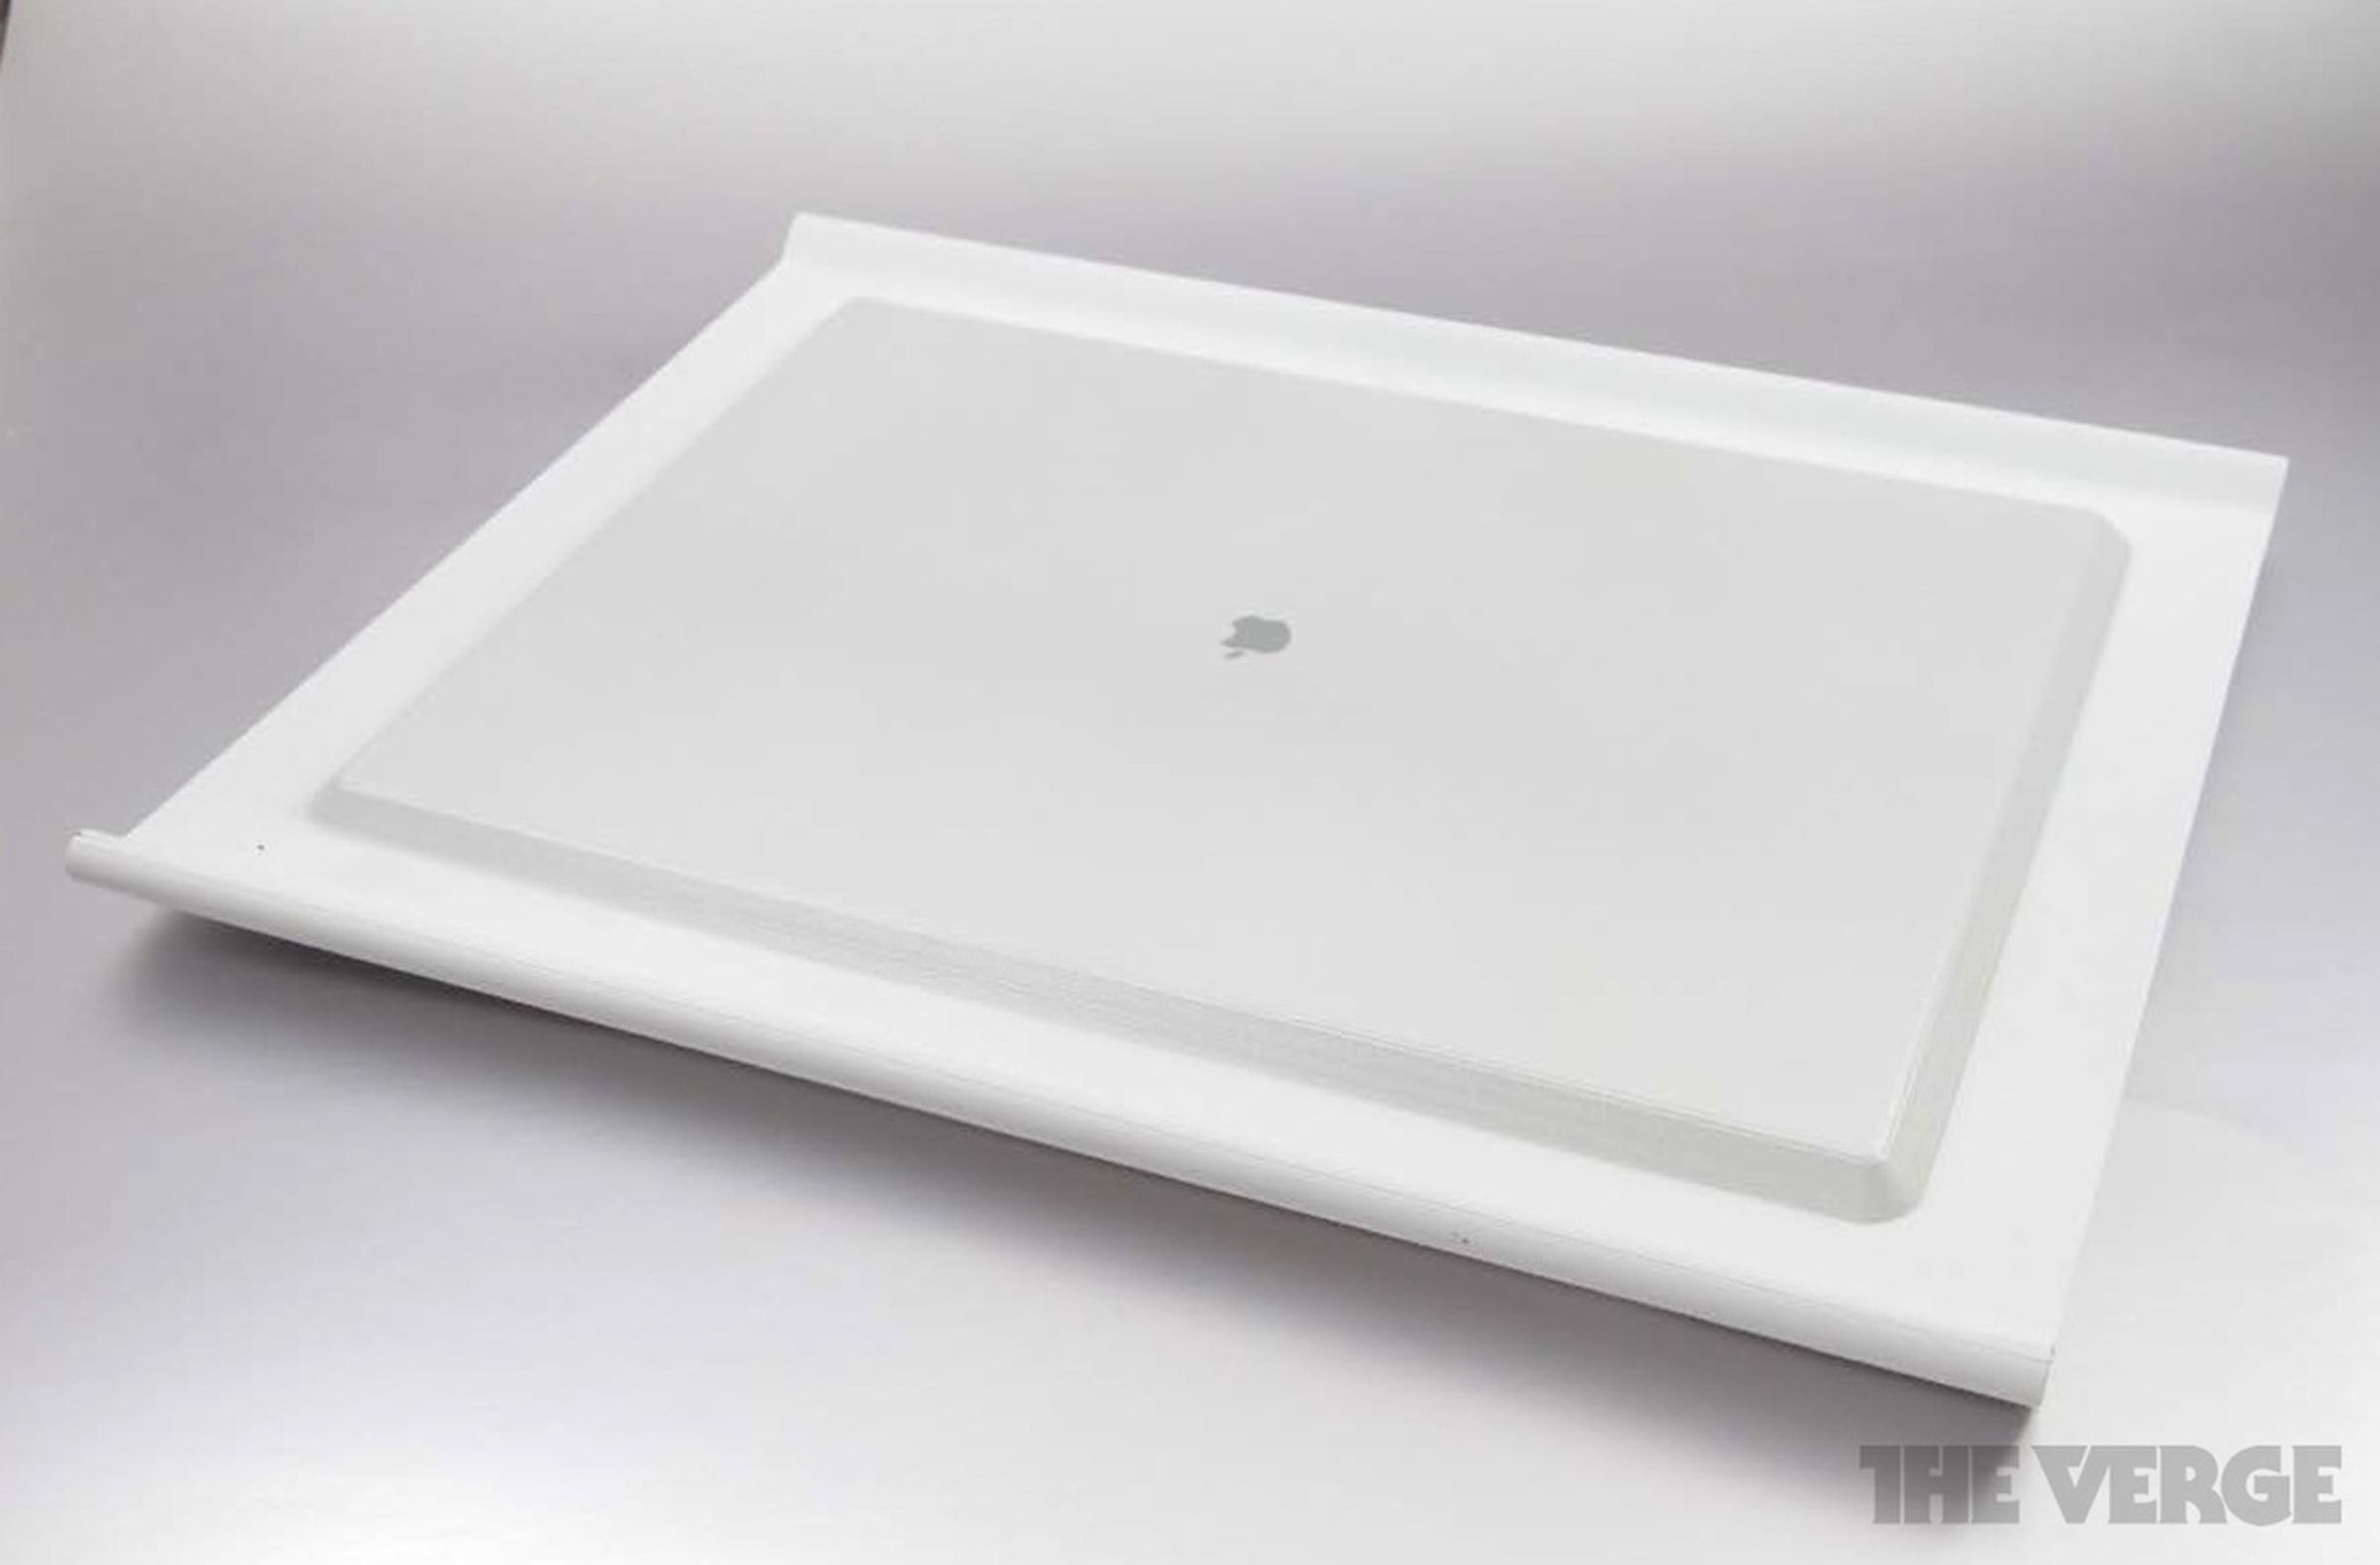 Apple iPad prototype photos